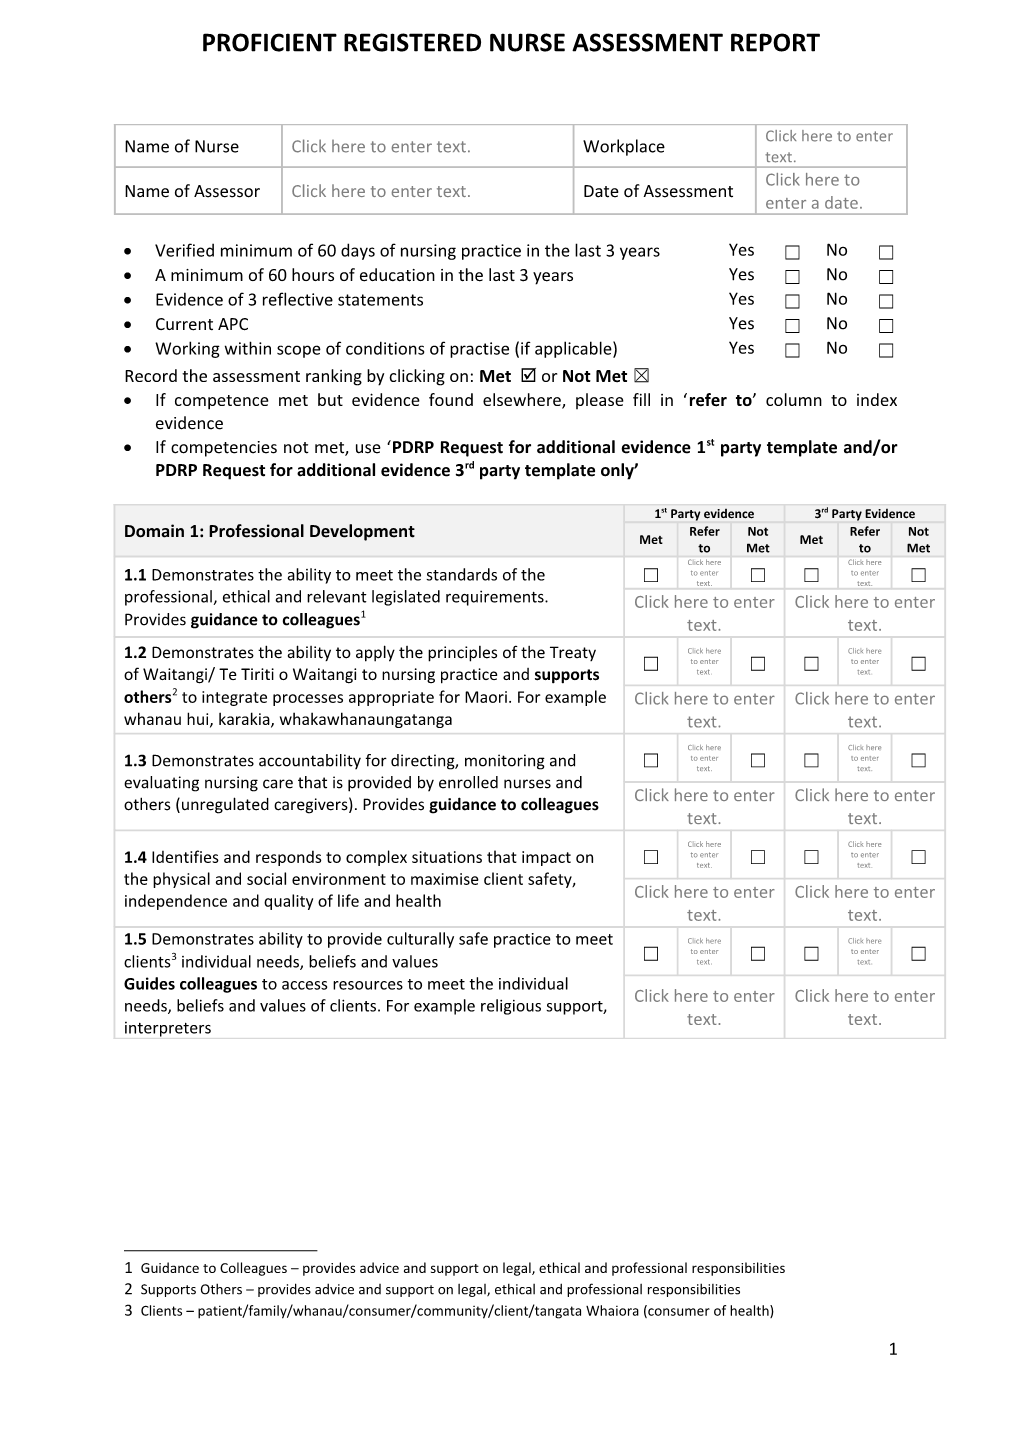 Proficient Registered Nurse Assessment Report